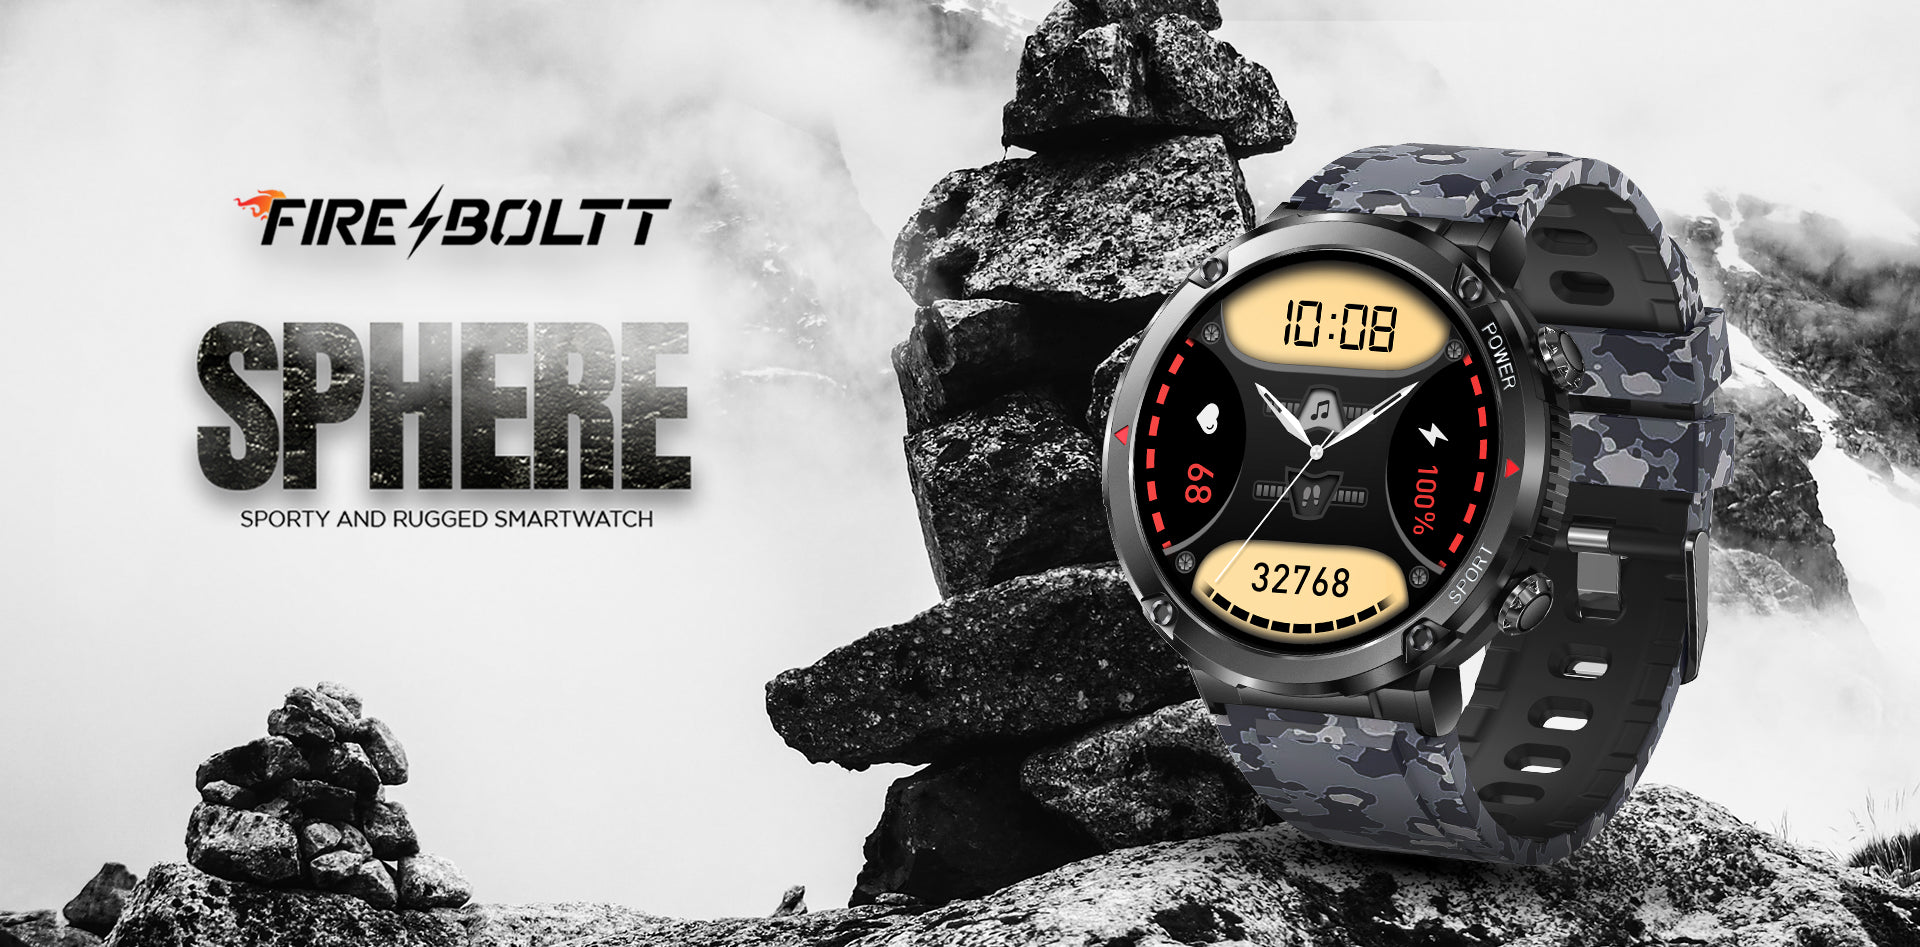 Fire-Boltt Sphere 1.6" Sporty Rugged Smartwatch 